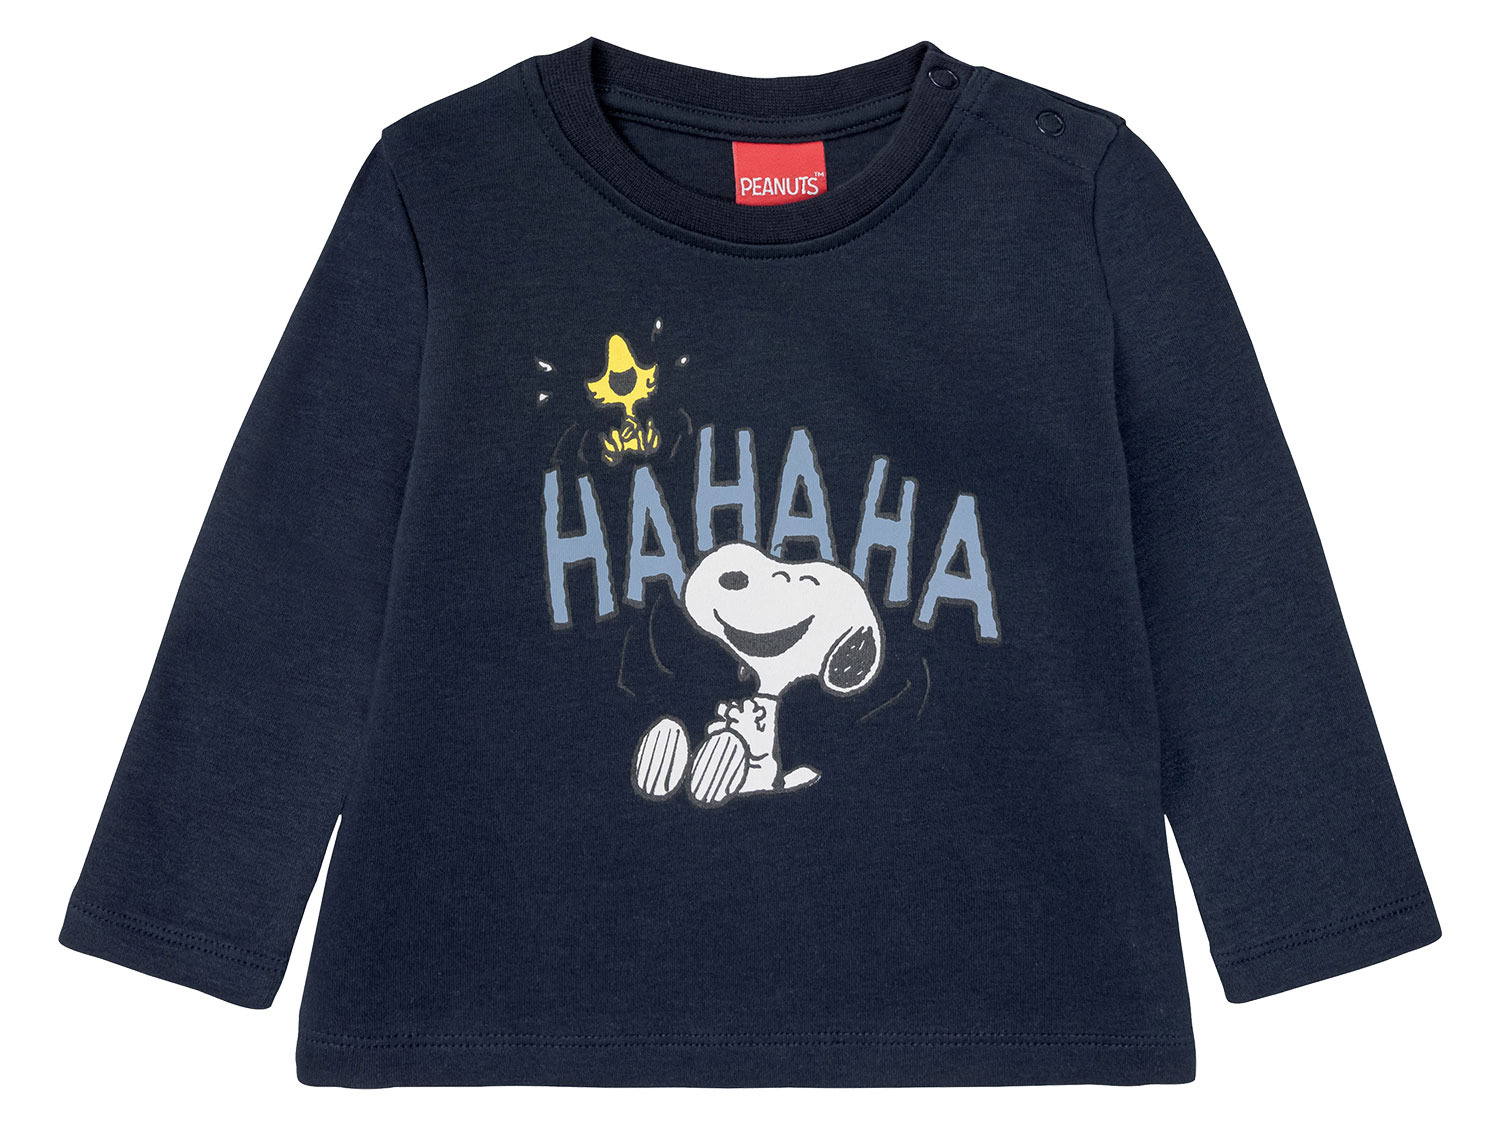 Snoopy Jungen Sweatshirt  T-Shirt Langarm Shirt  3 Varianten Größe 74 bis 86 